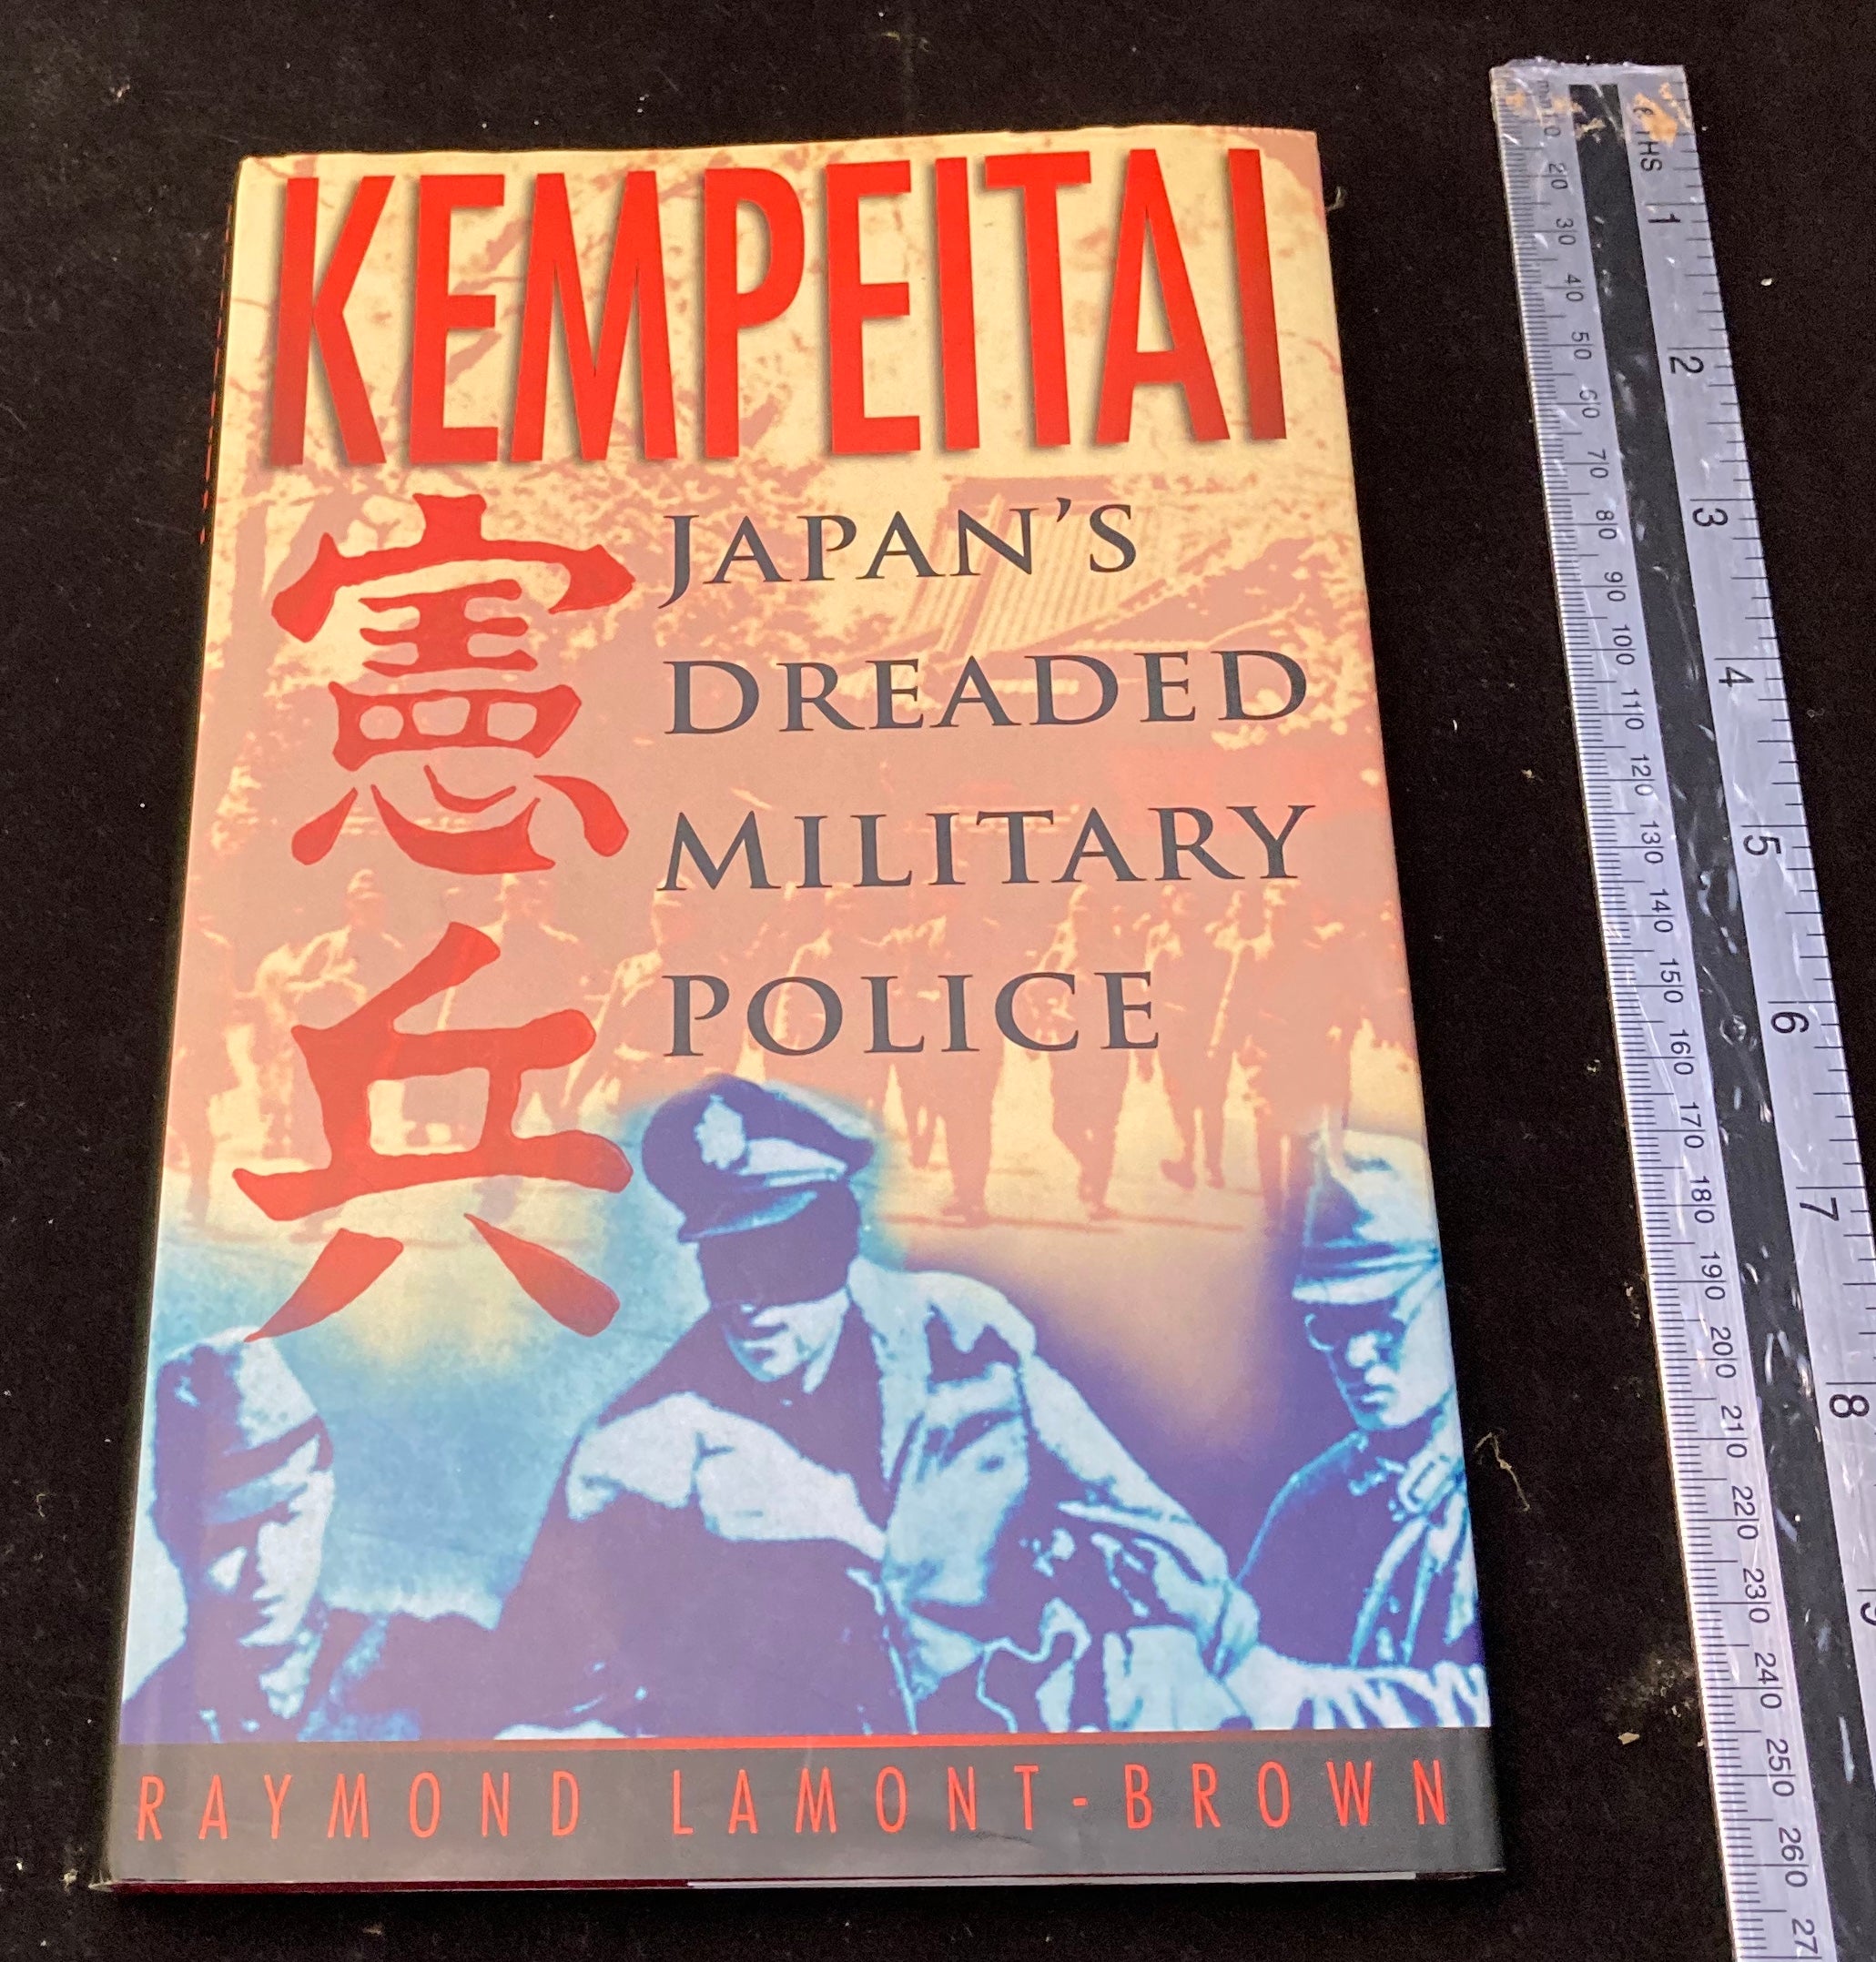 Kempeitai , Japan’s dreaded Military police . - Yamazakura